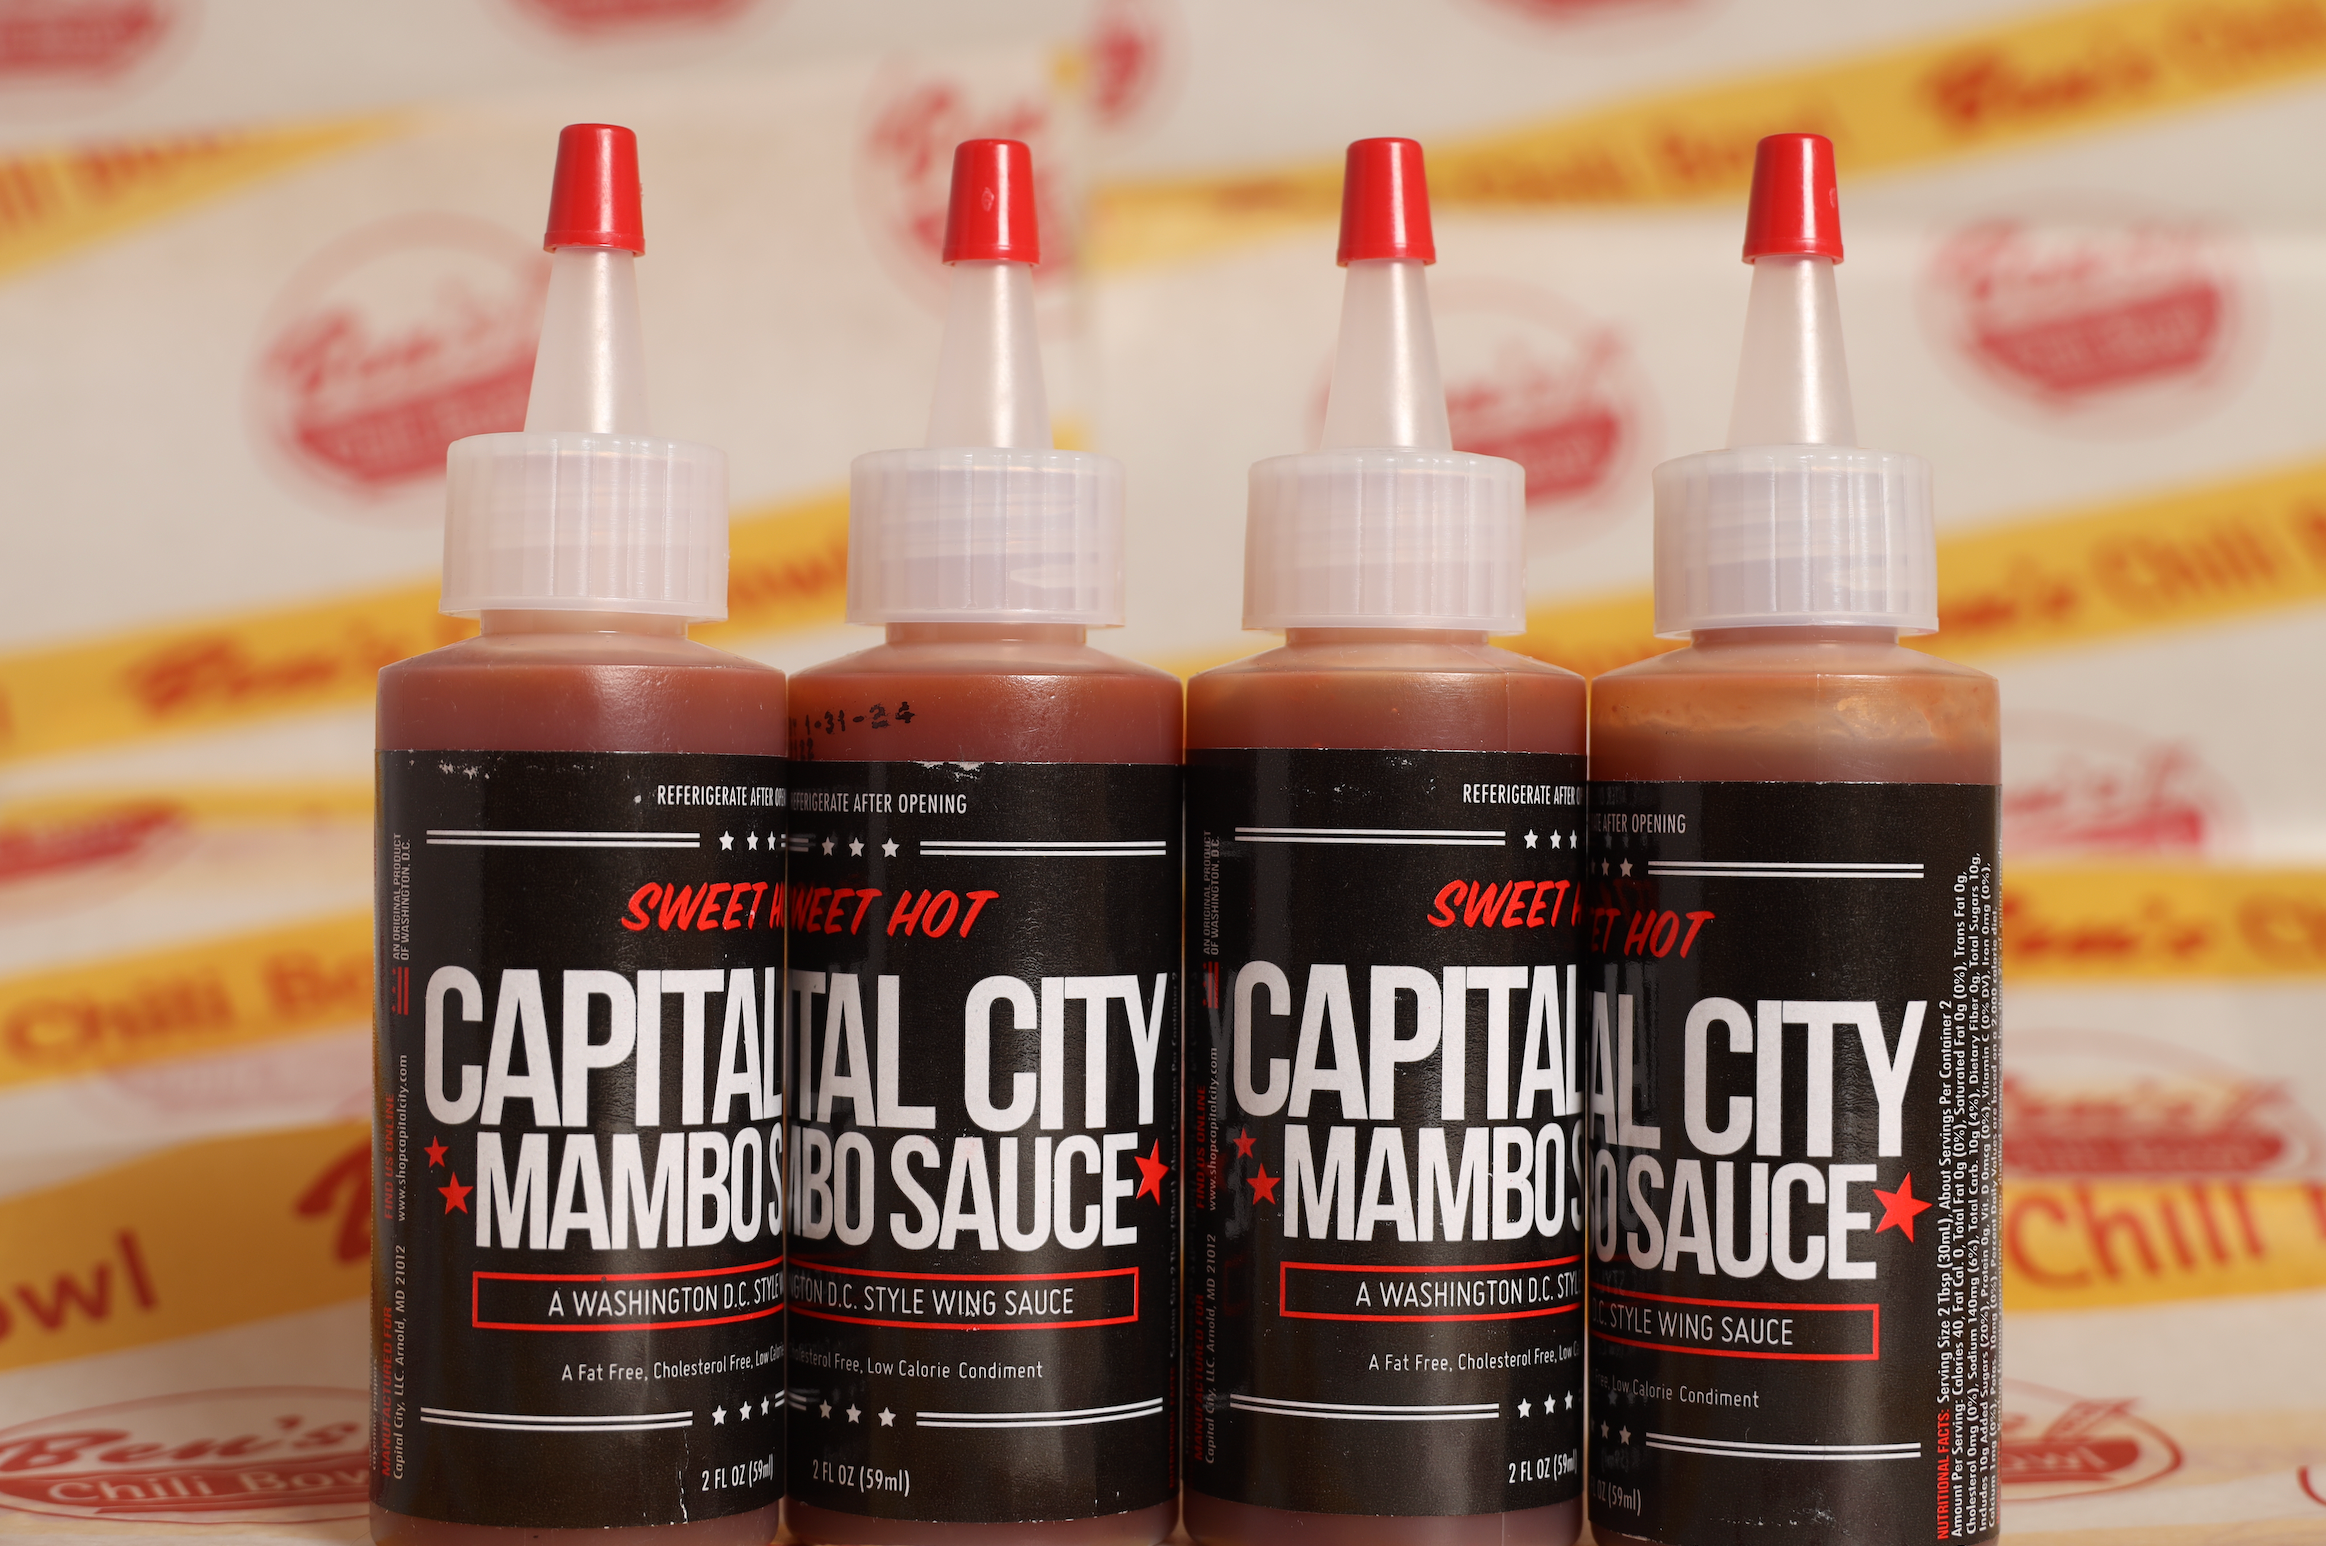 Capital City Mambo Sauce (2-12oz bottles) – Ben's Chili Bowl